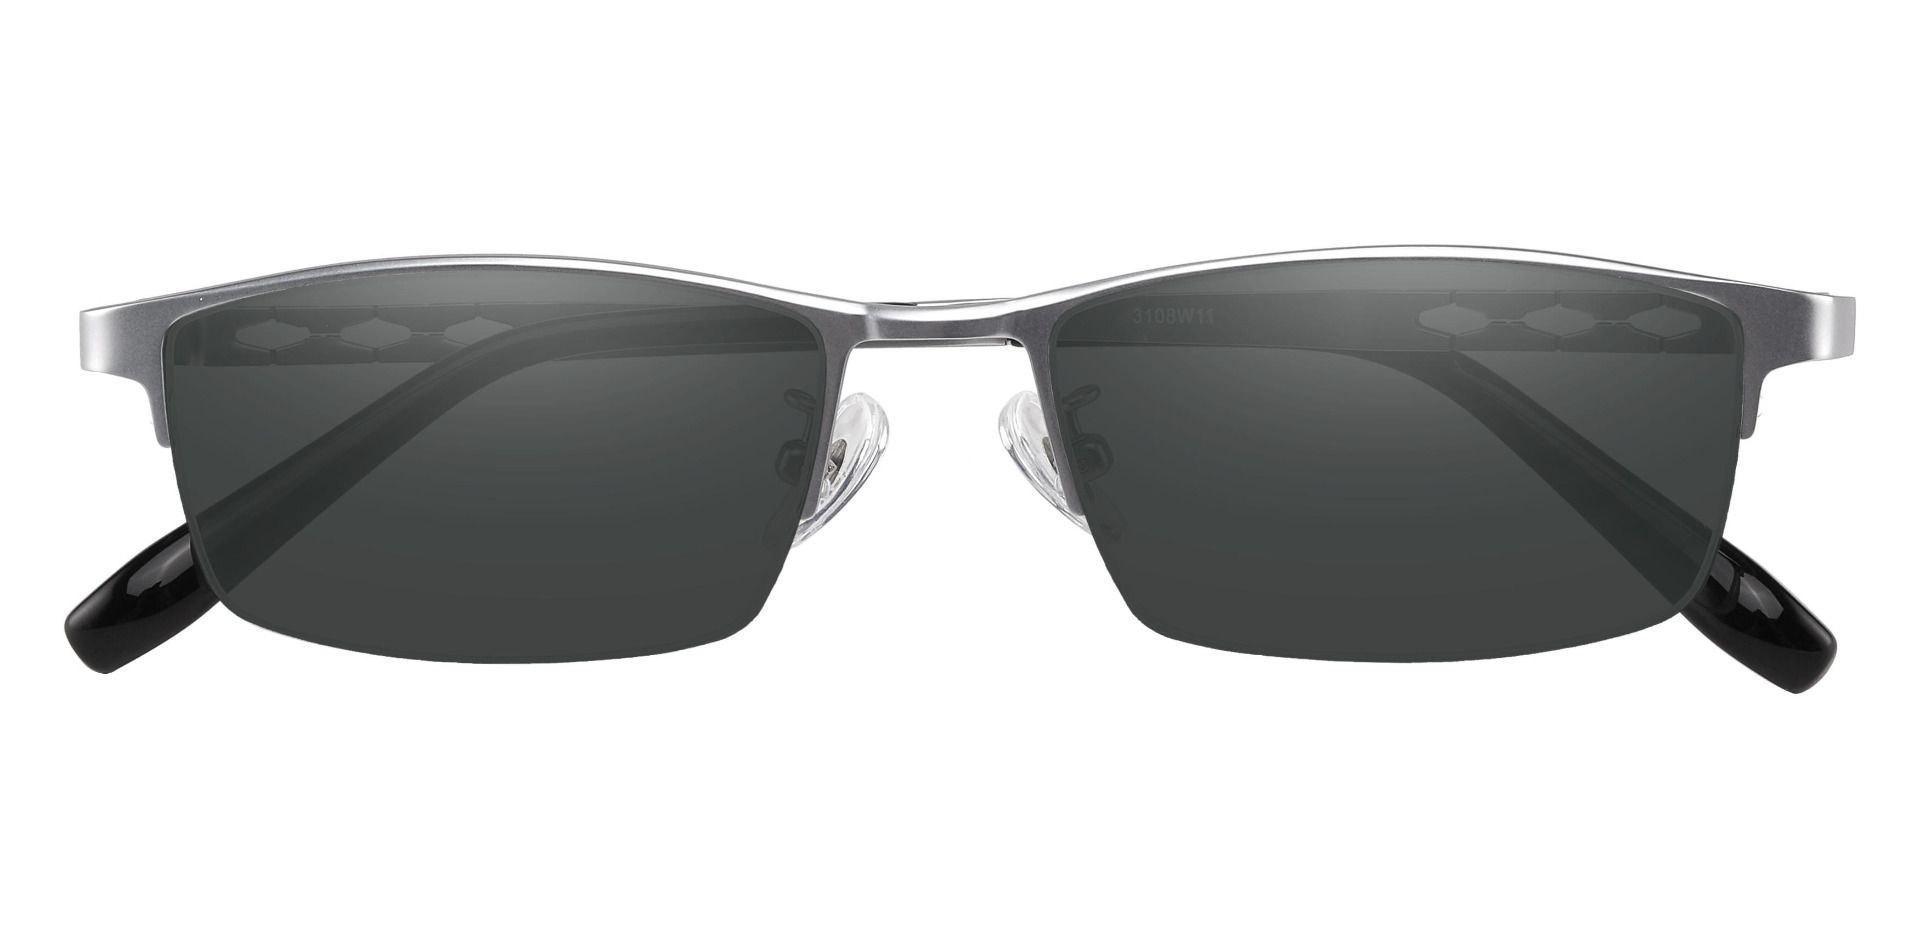 Burlington Rectangle Lined Bifocal Sunglasses - Silver Frame With Gray Lenses